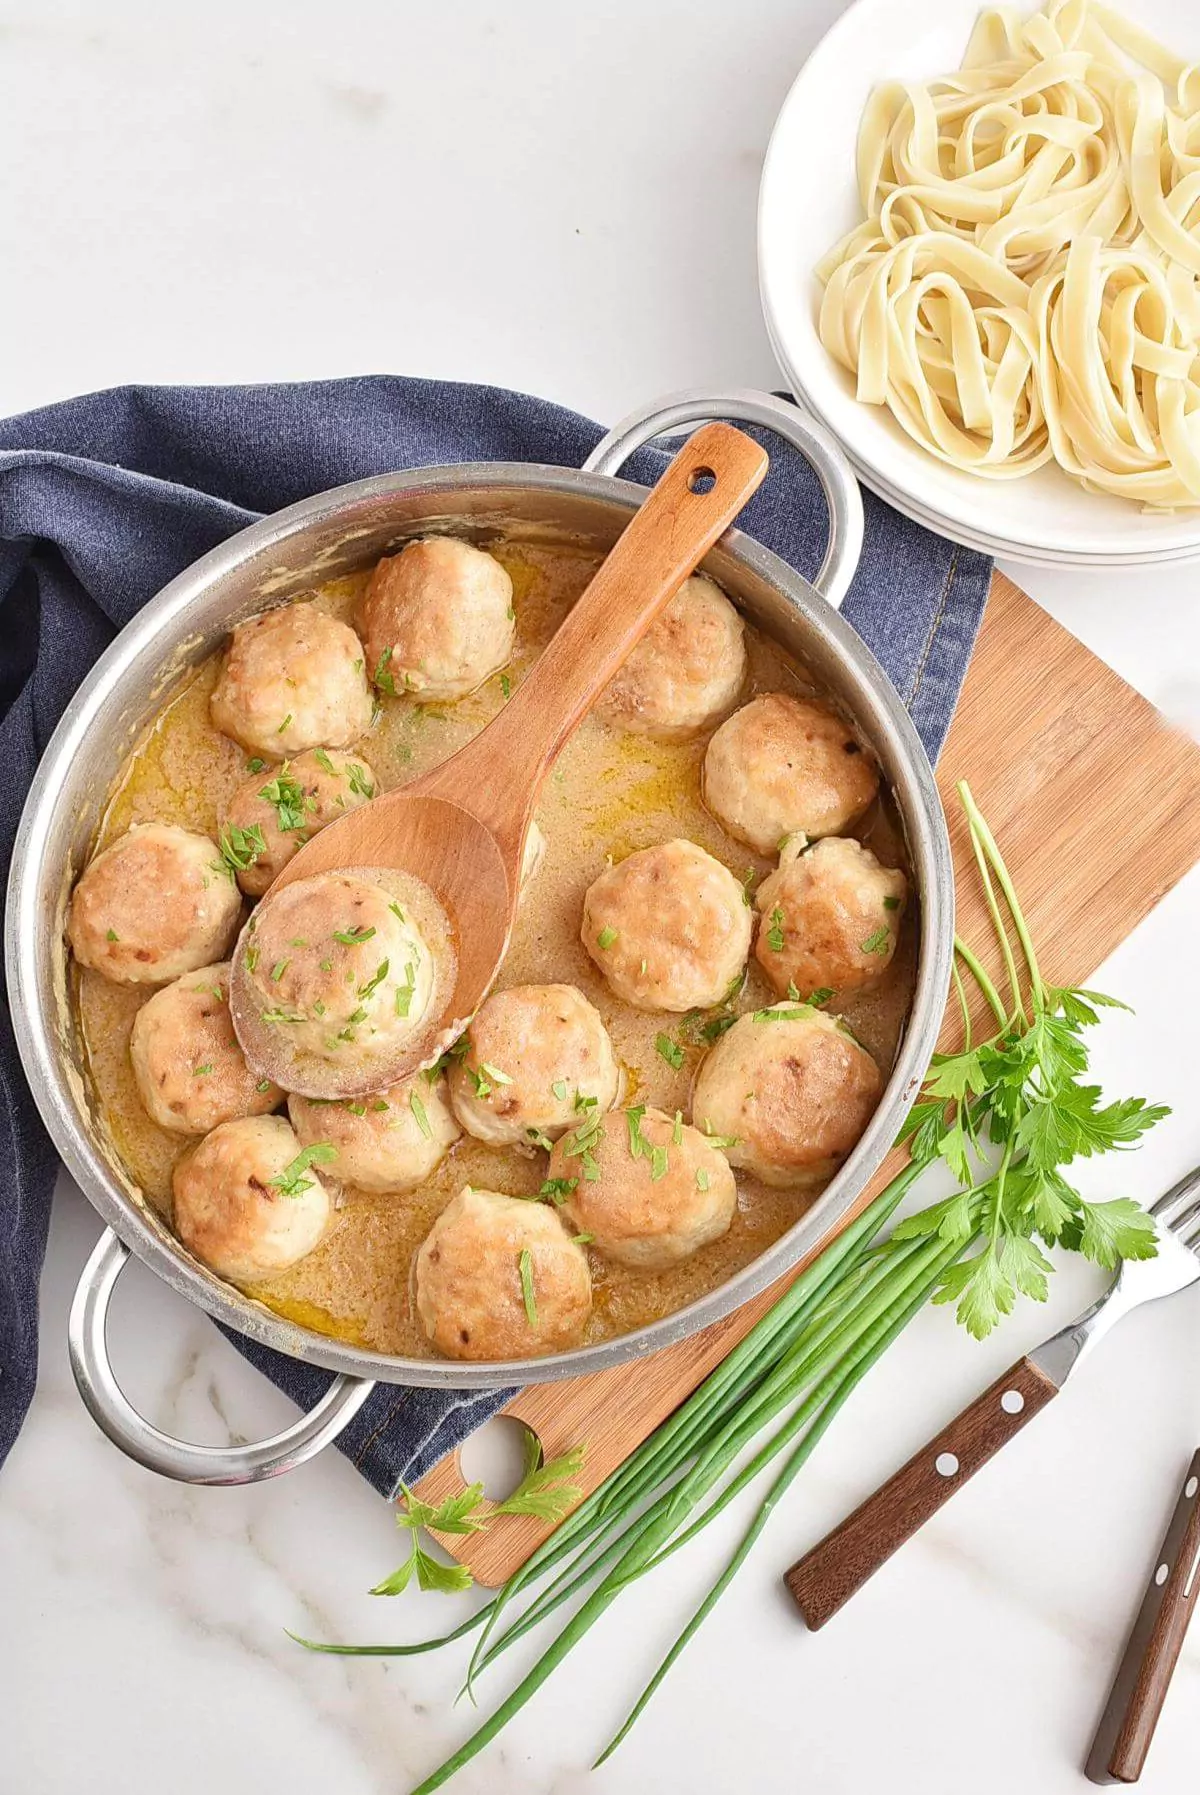 Russian Meatballs - Tefteli Recipe - Cook.me Recipes